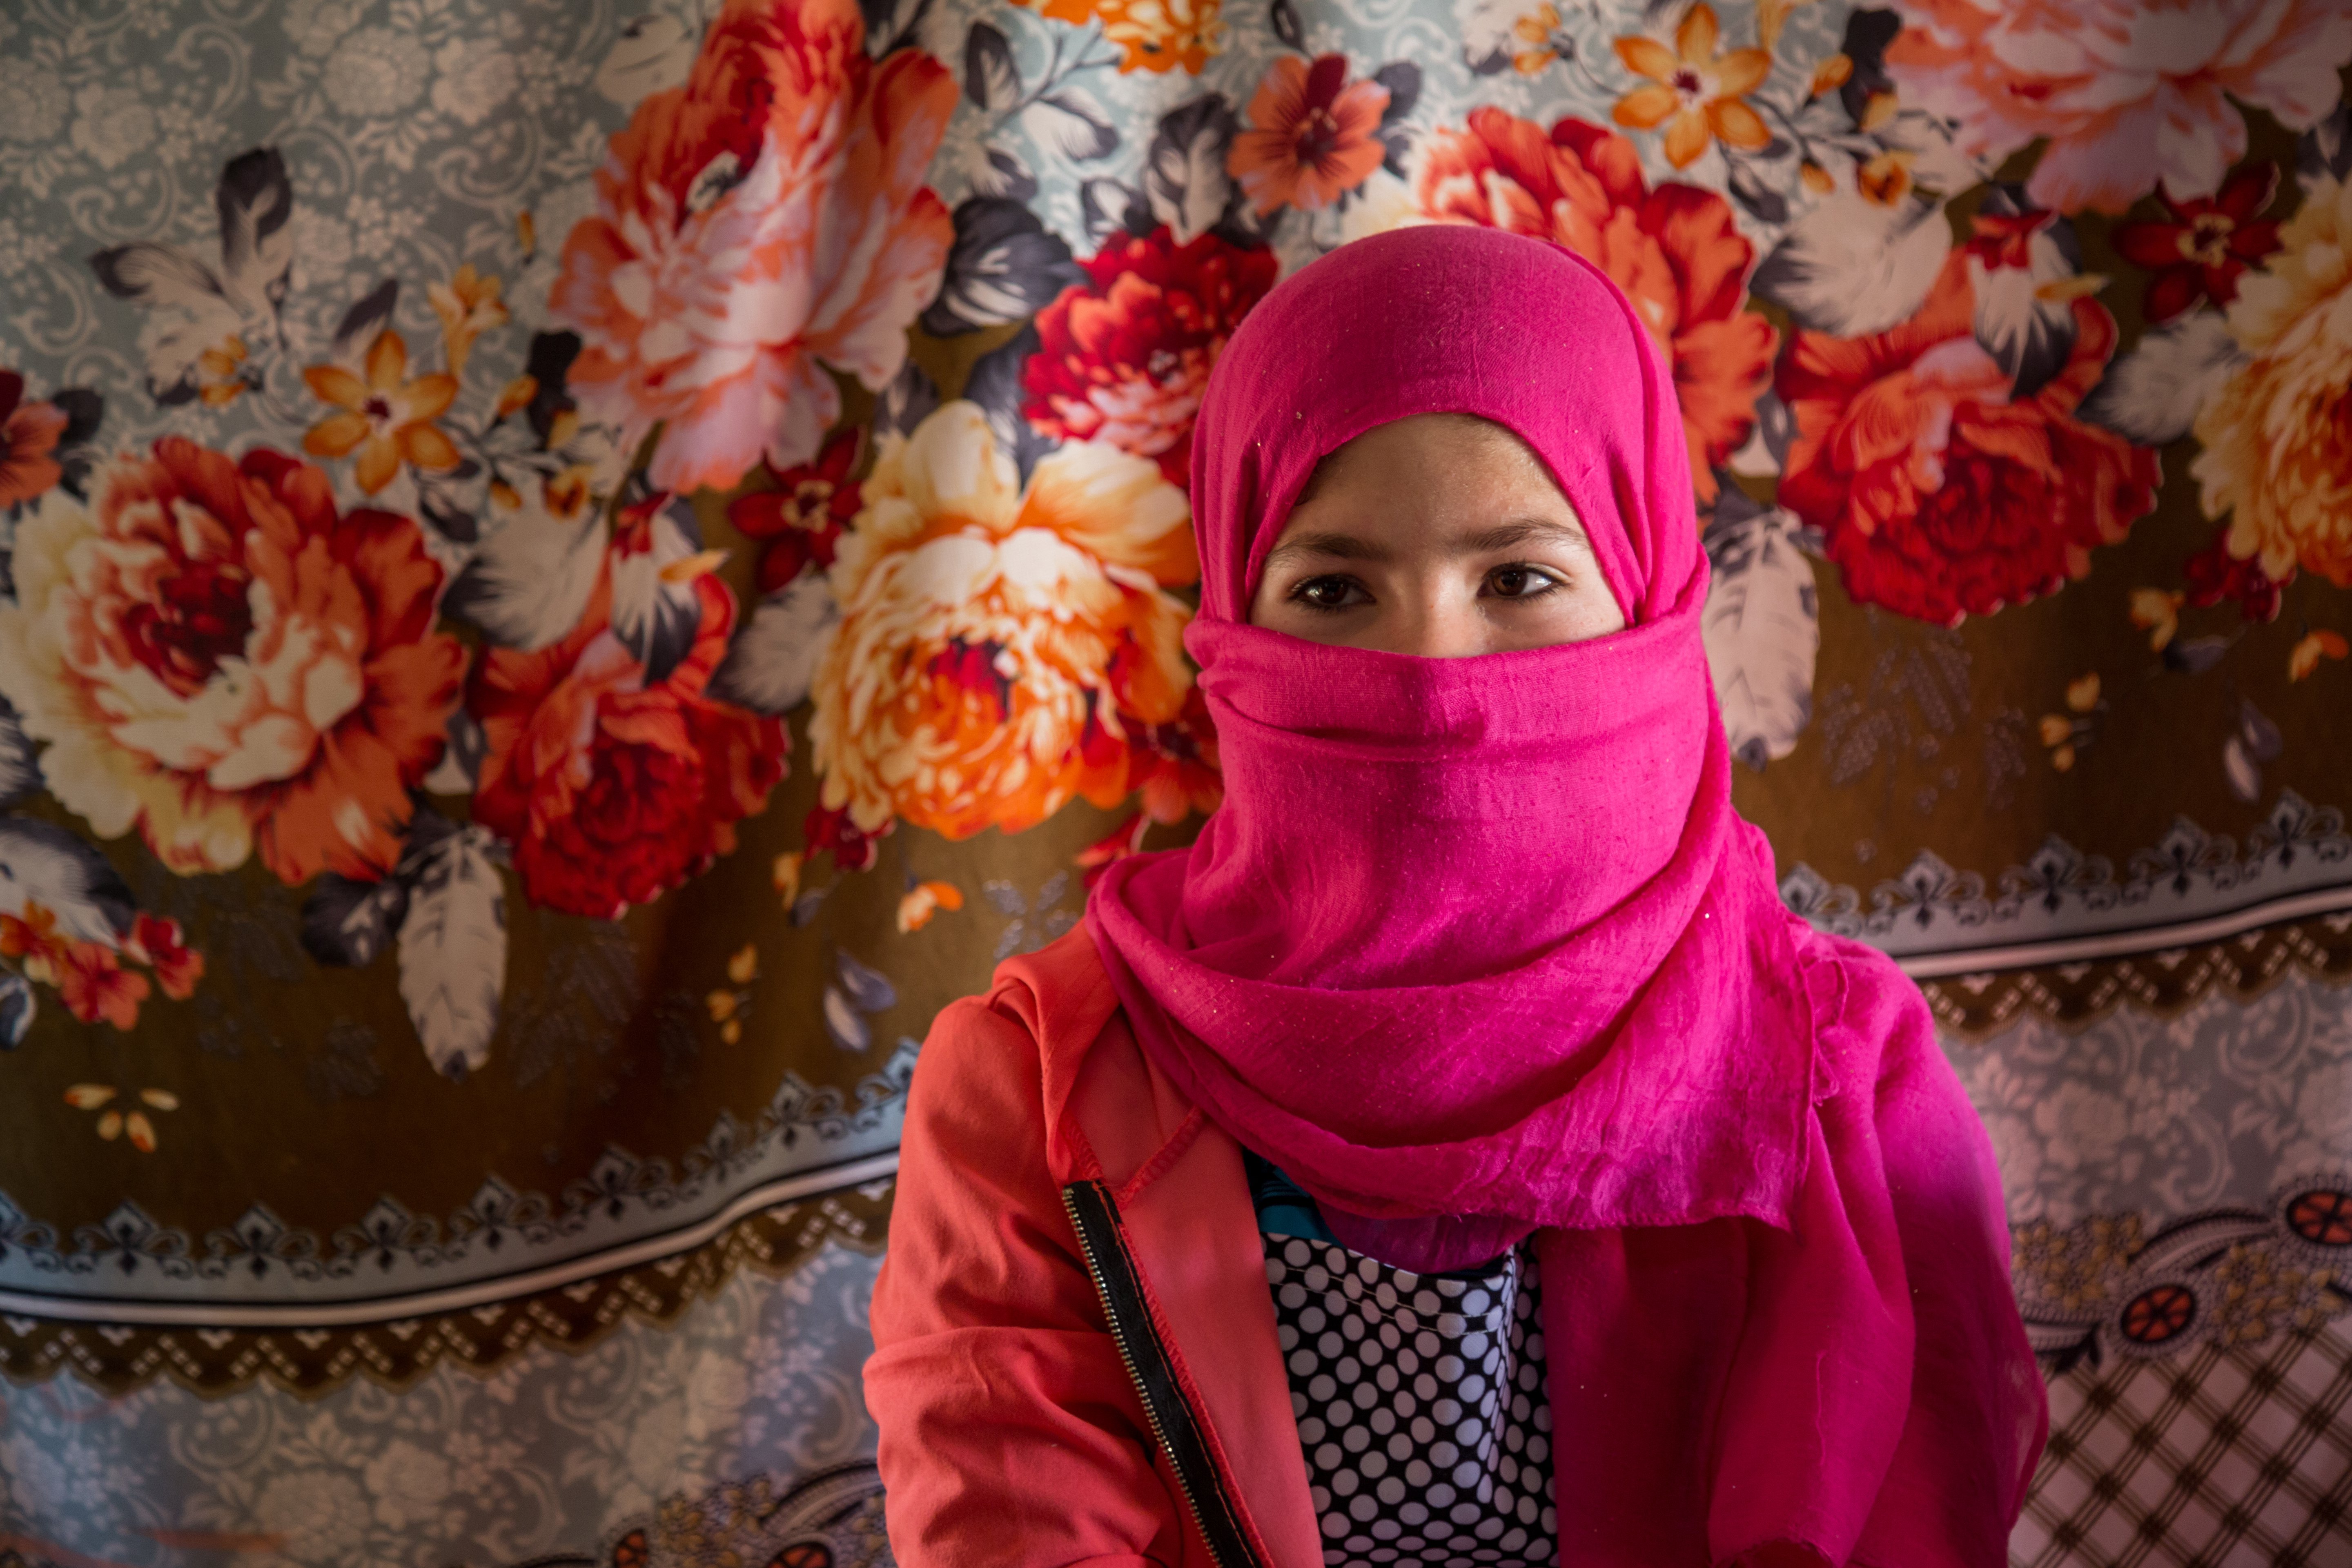 13-year-old girl living in an Informal Tented Settlement in Jordan